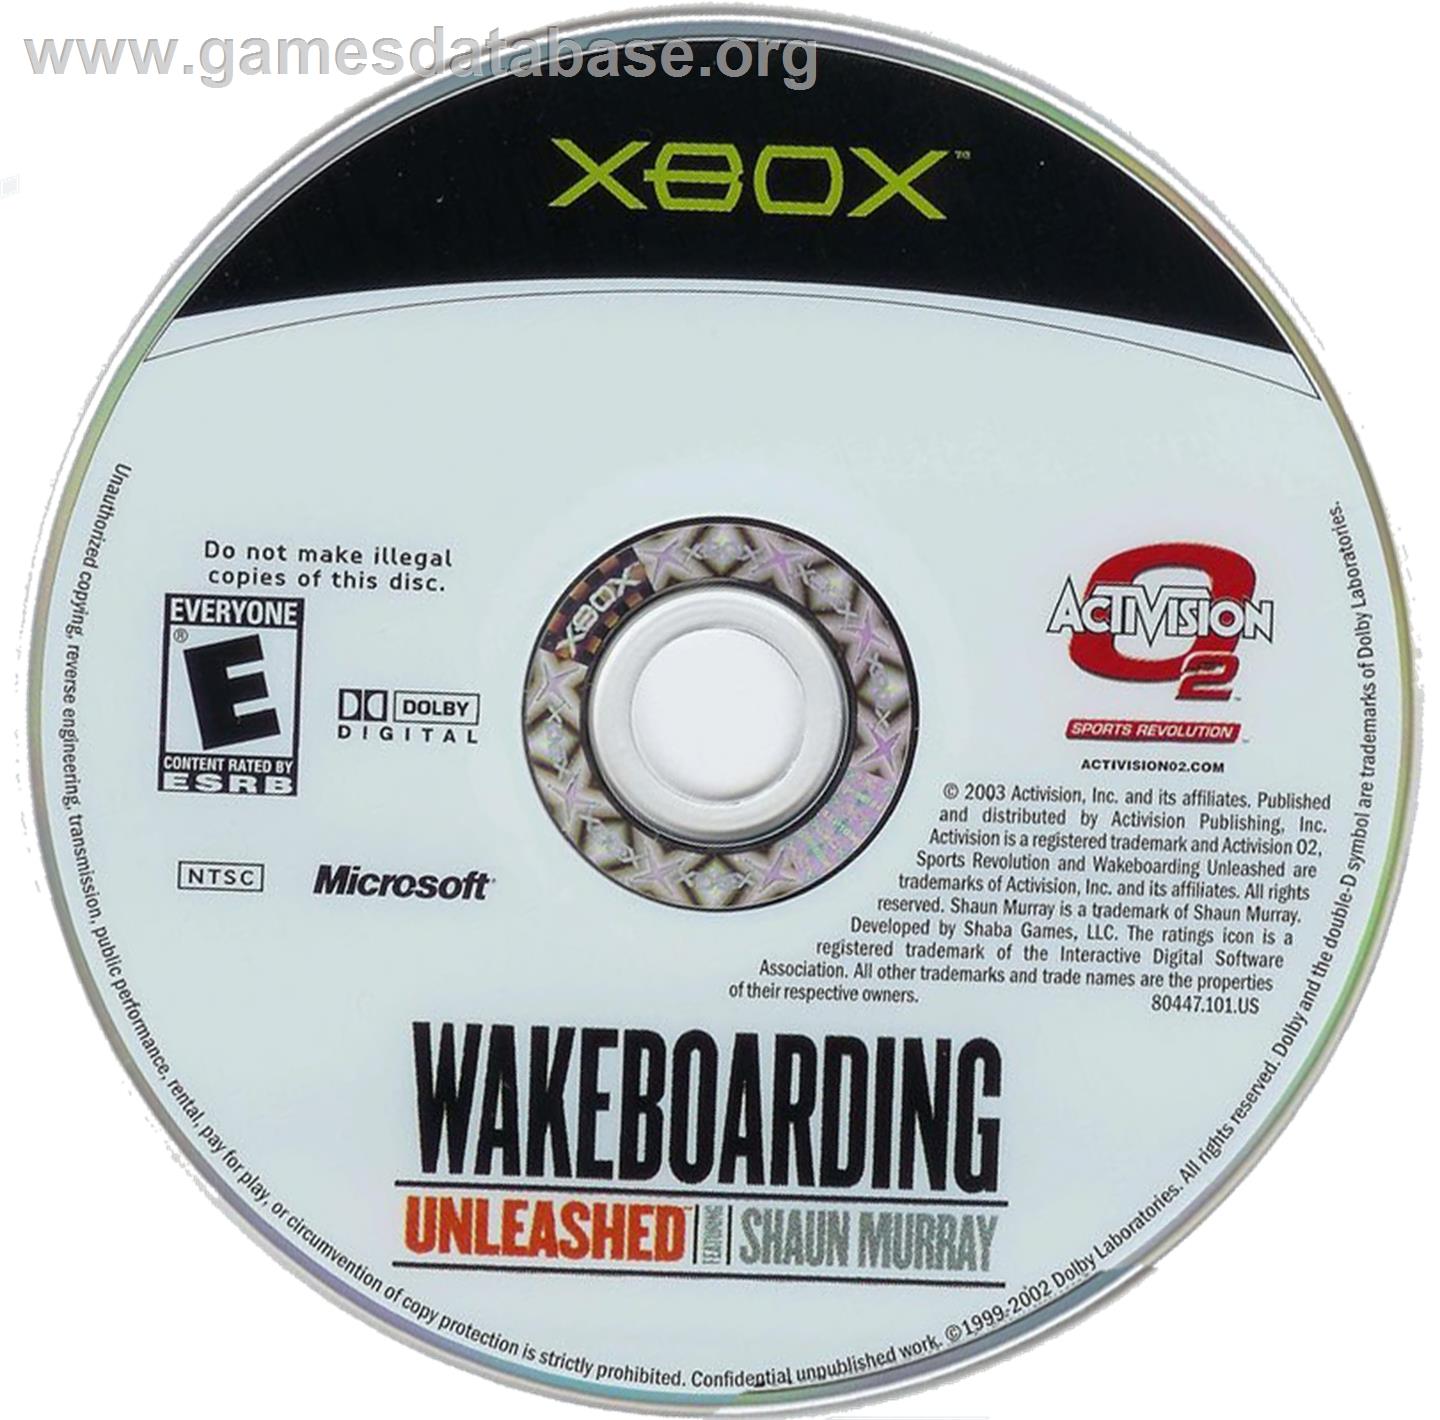 Wakeboarding Unleashed featuring Shaun Murray - Microsoft Xbox - Artwork - CD